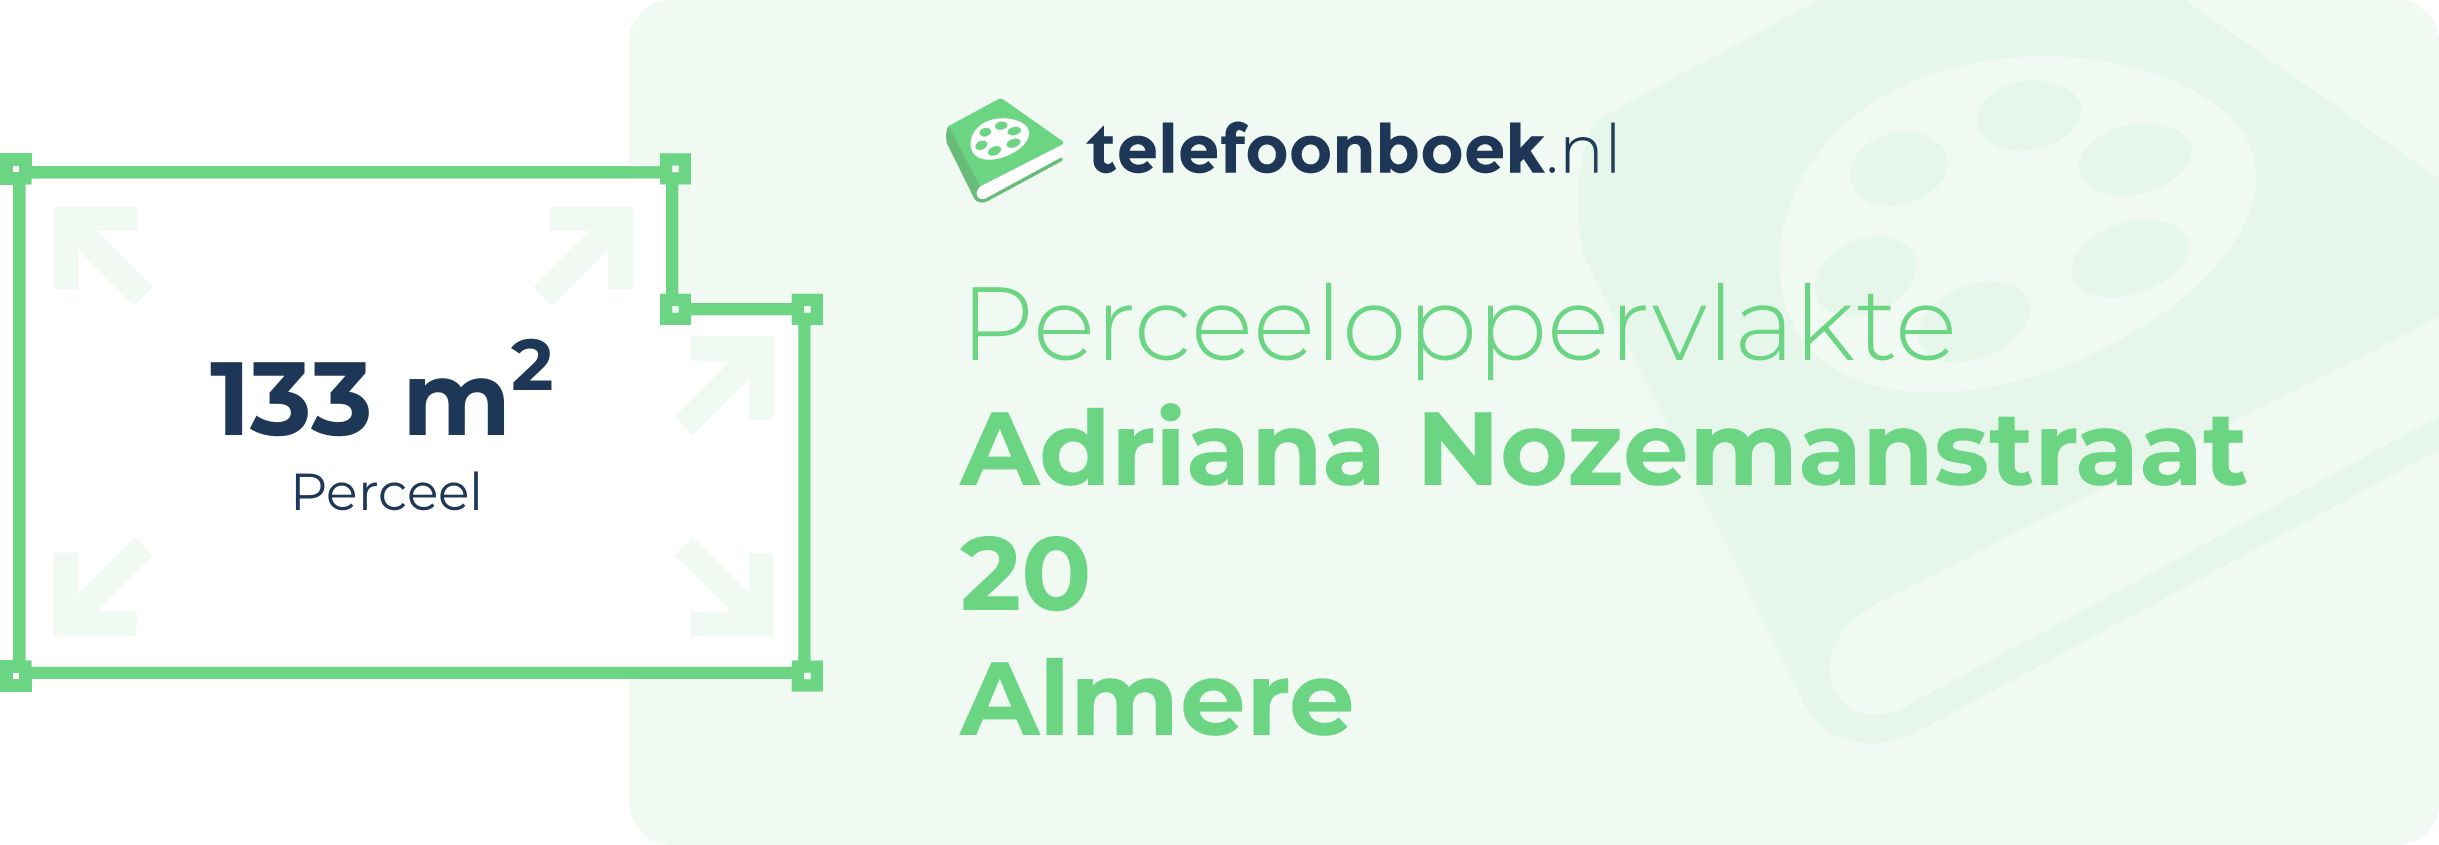 Perceeloppervlakte Adriana Nozemanstraat 20 Almere